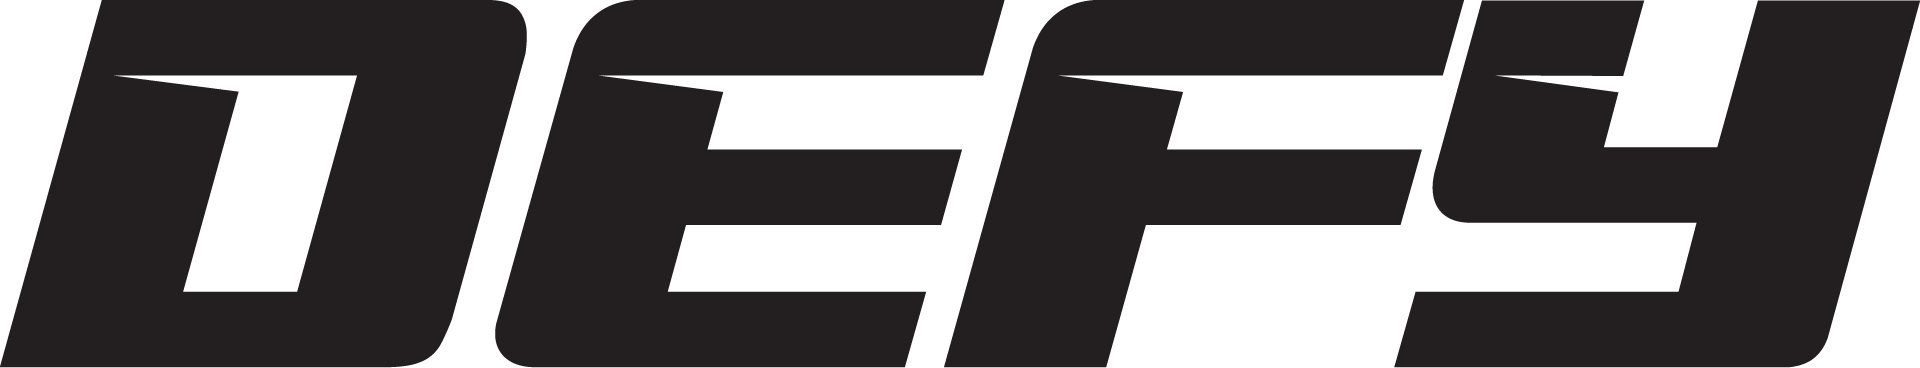 defy-logo